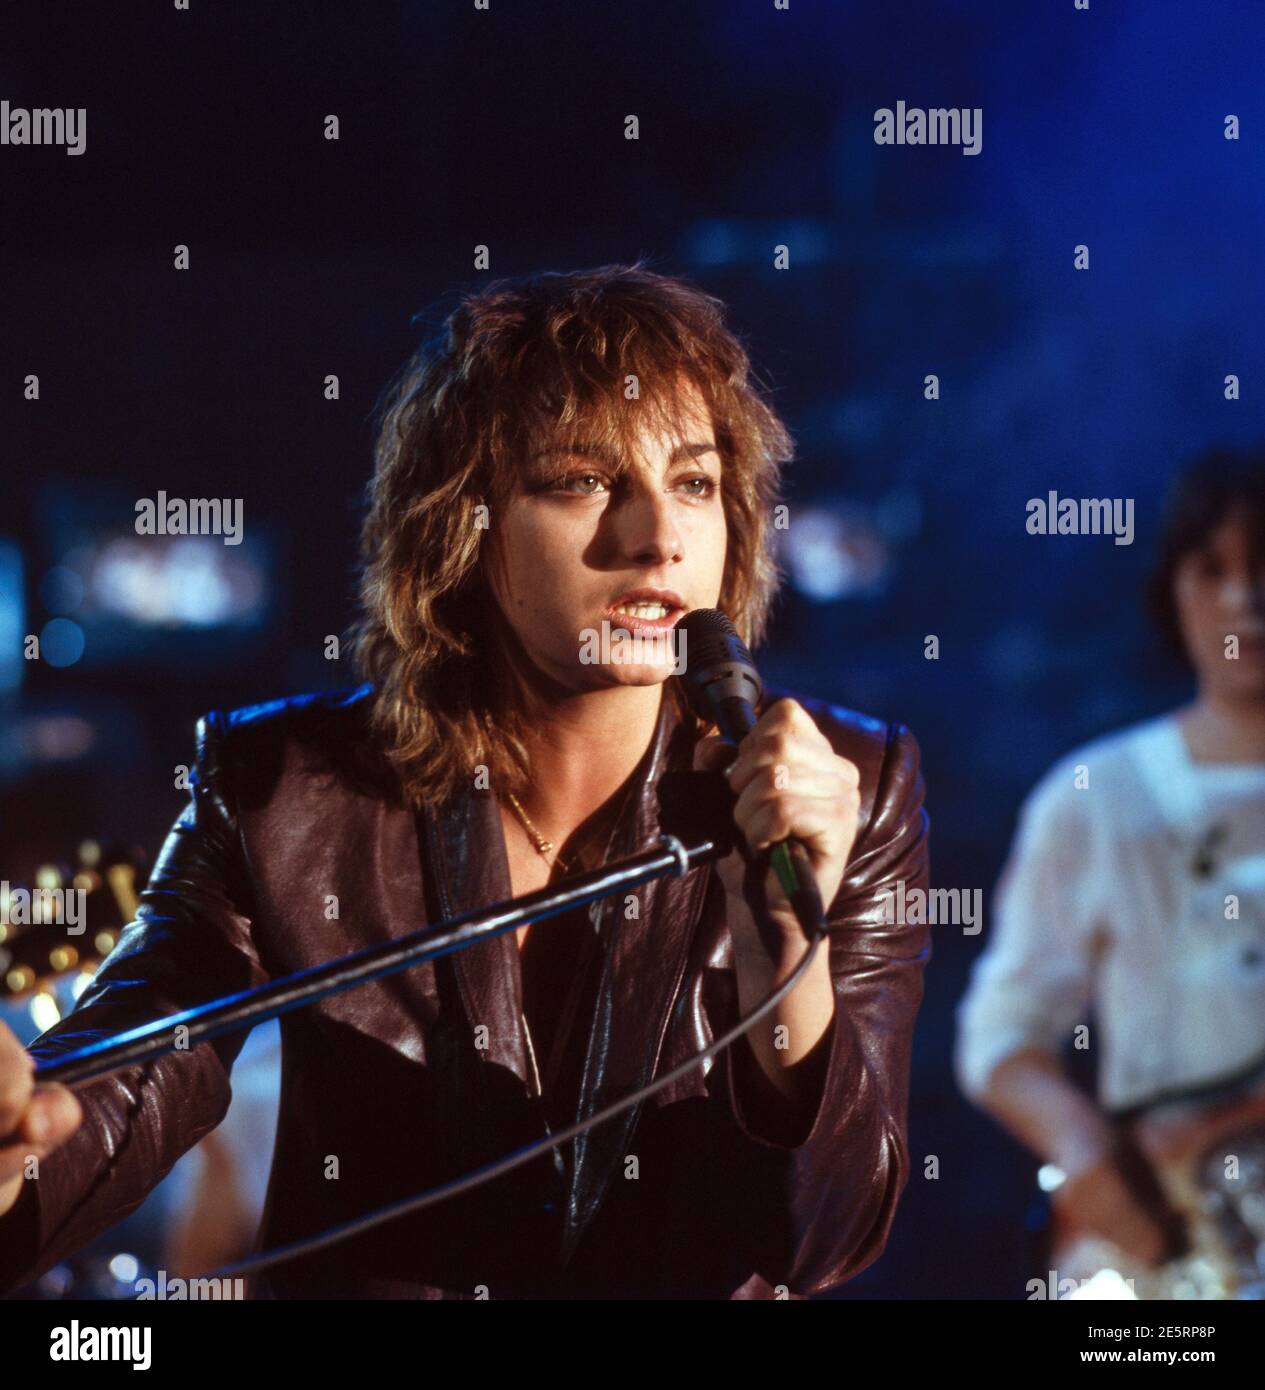 GIANNA NANNINI, italienische Rocksängerin, hier bei einem TV Auftritt, 1981. GIANNA NANNINI, Italian Rock singer and singer-songwriter, TV Show performance, 1979. Stock Photo